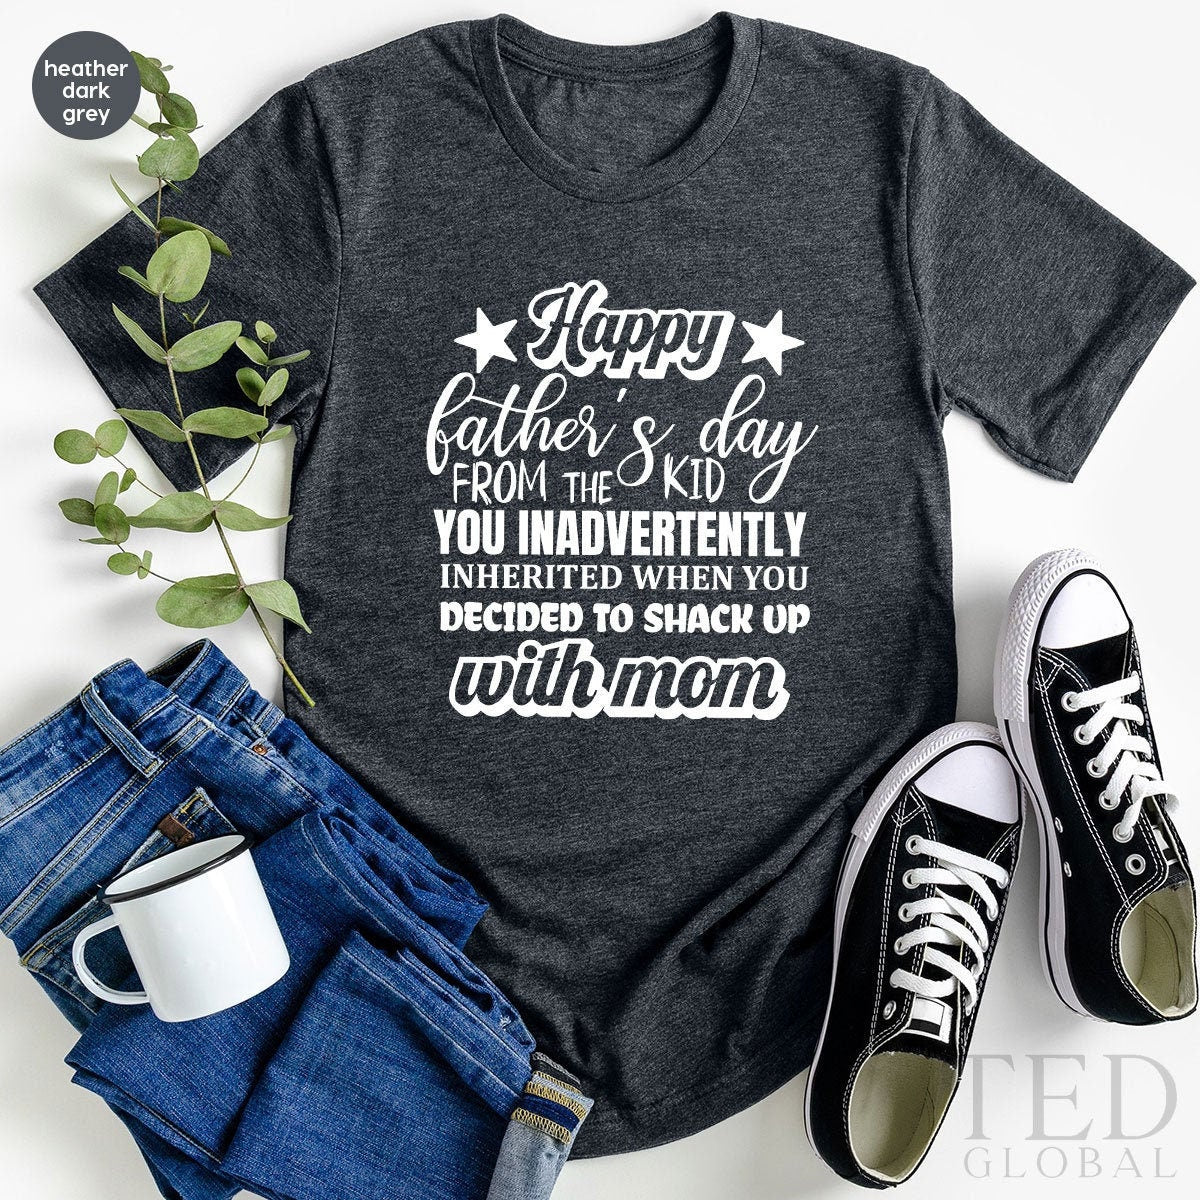 Step Dad Gift, Step Dad Fathers Day Gift,  Bonus Dad Gift, Dad Shirt, Funny Dad Shirt, Step Dad Shirt, Happy Fathers Day, Stepdad Gift - Fastdeliverytees.com